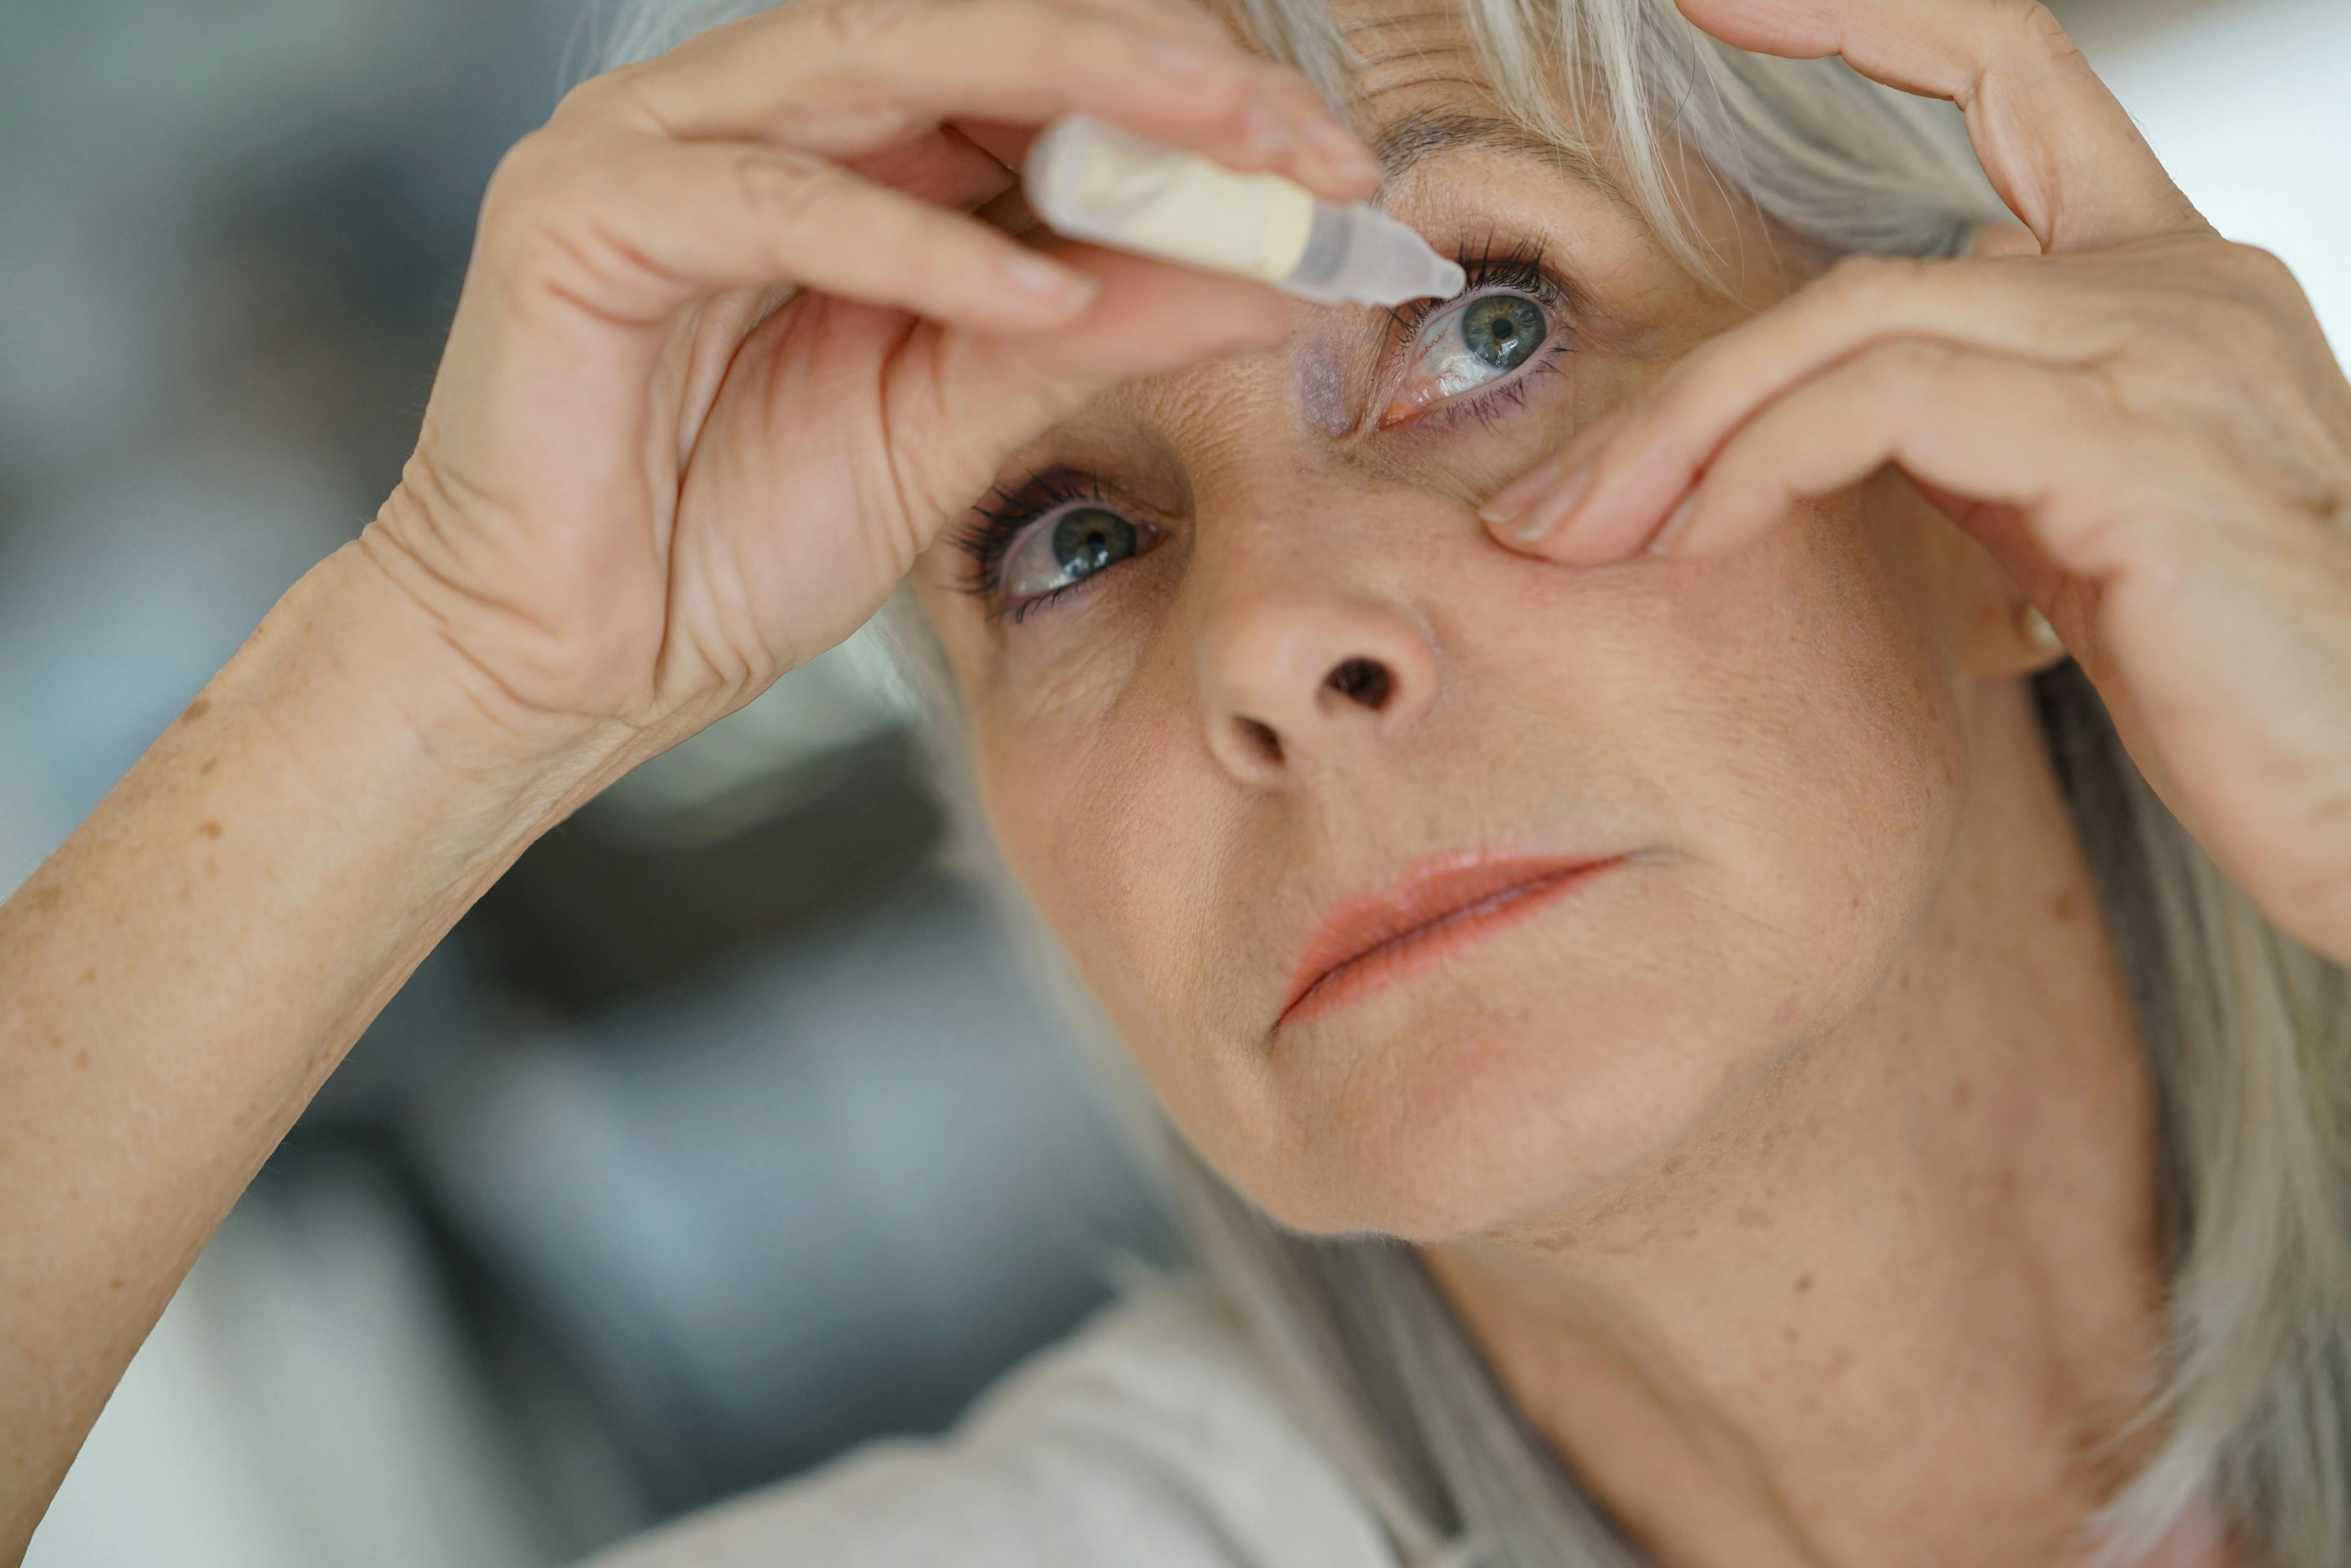 Eye drops for presbyopia treatment receive FDA approval